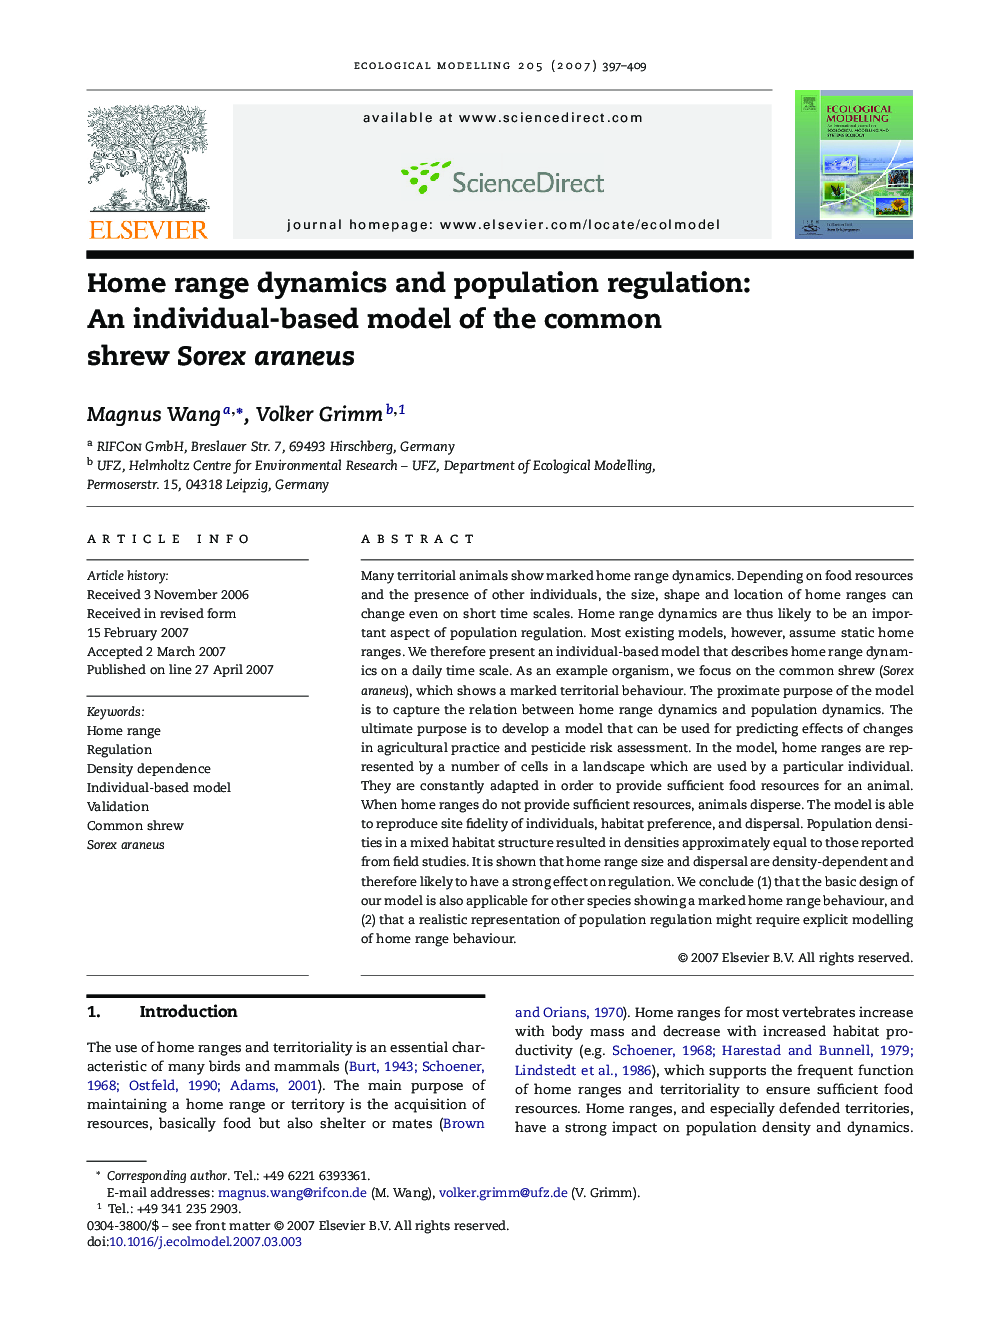 Home range dynamics and population regulation: An individual-based model of the common shrew Sorex araneus